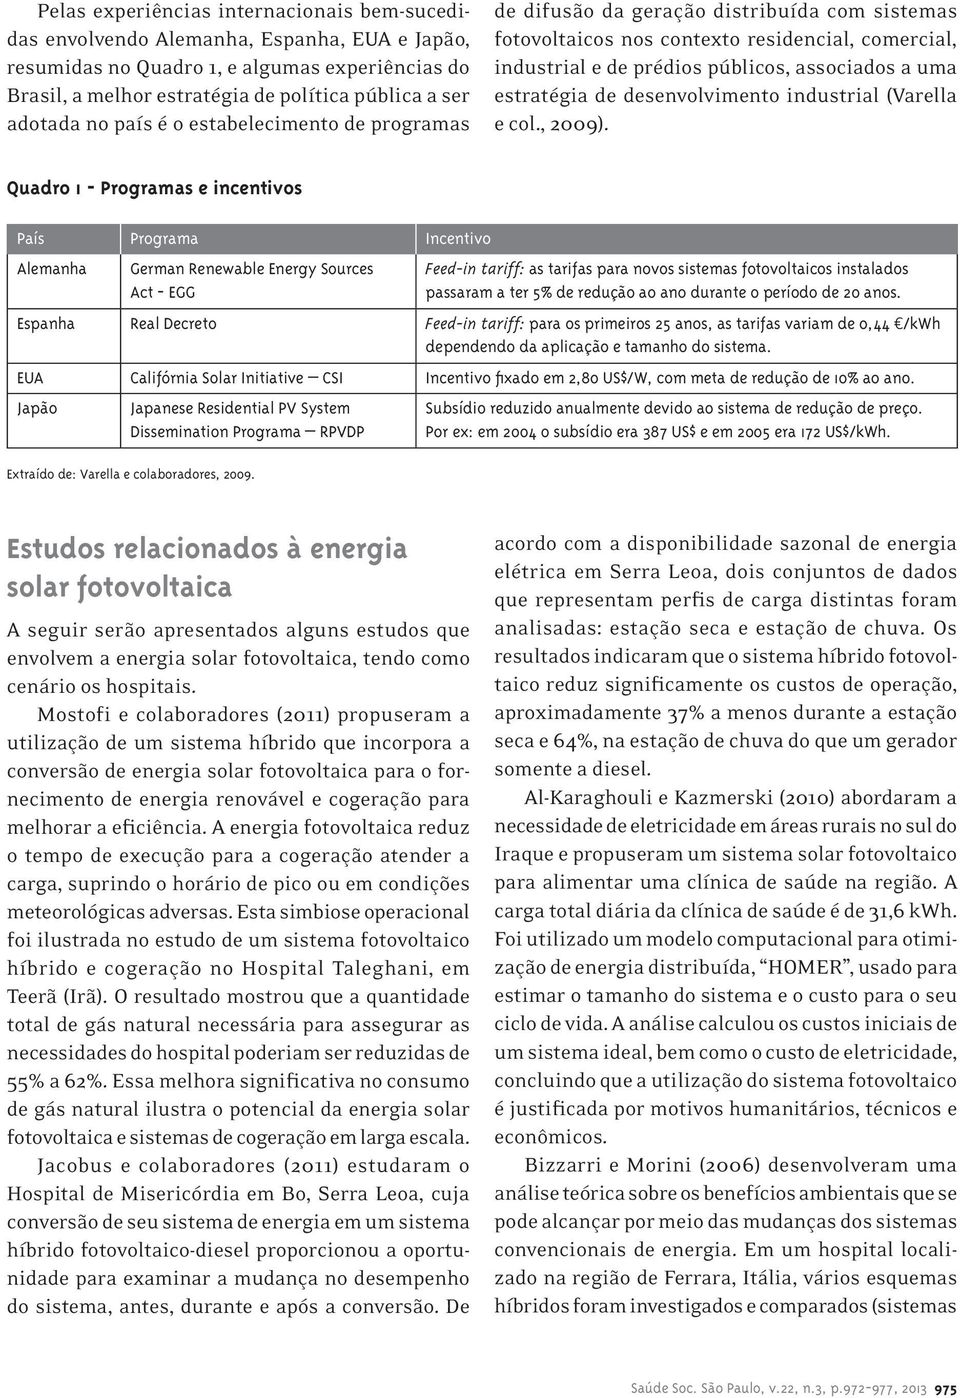 estratégia de desenvolvimento industrial (Varella e col., 2009).